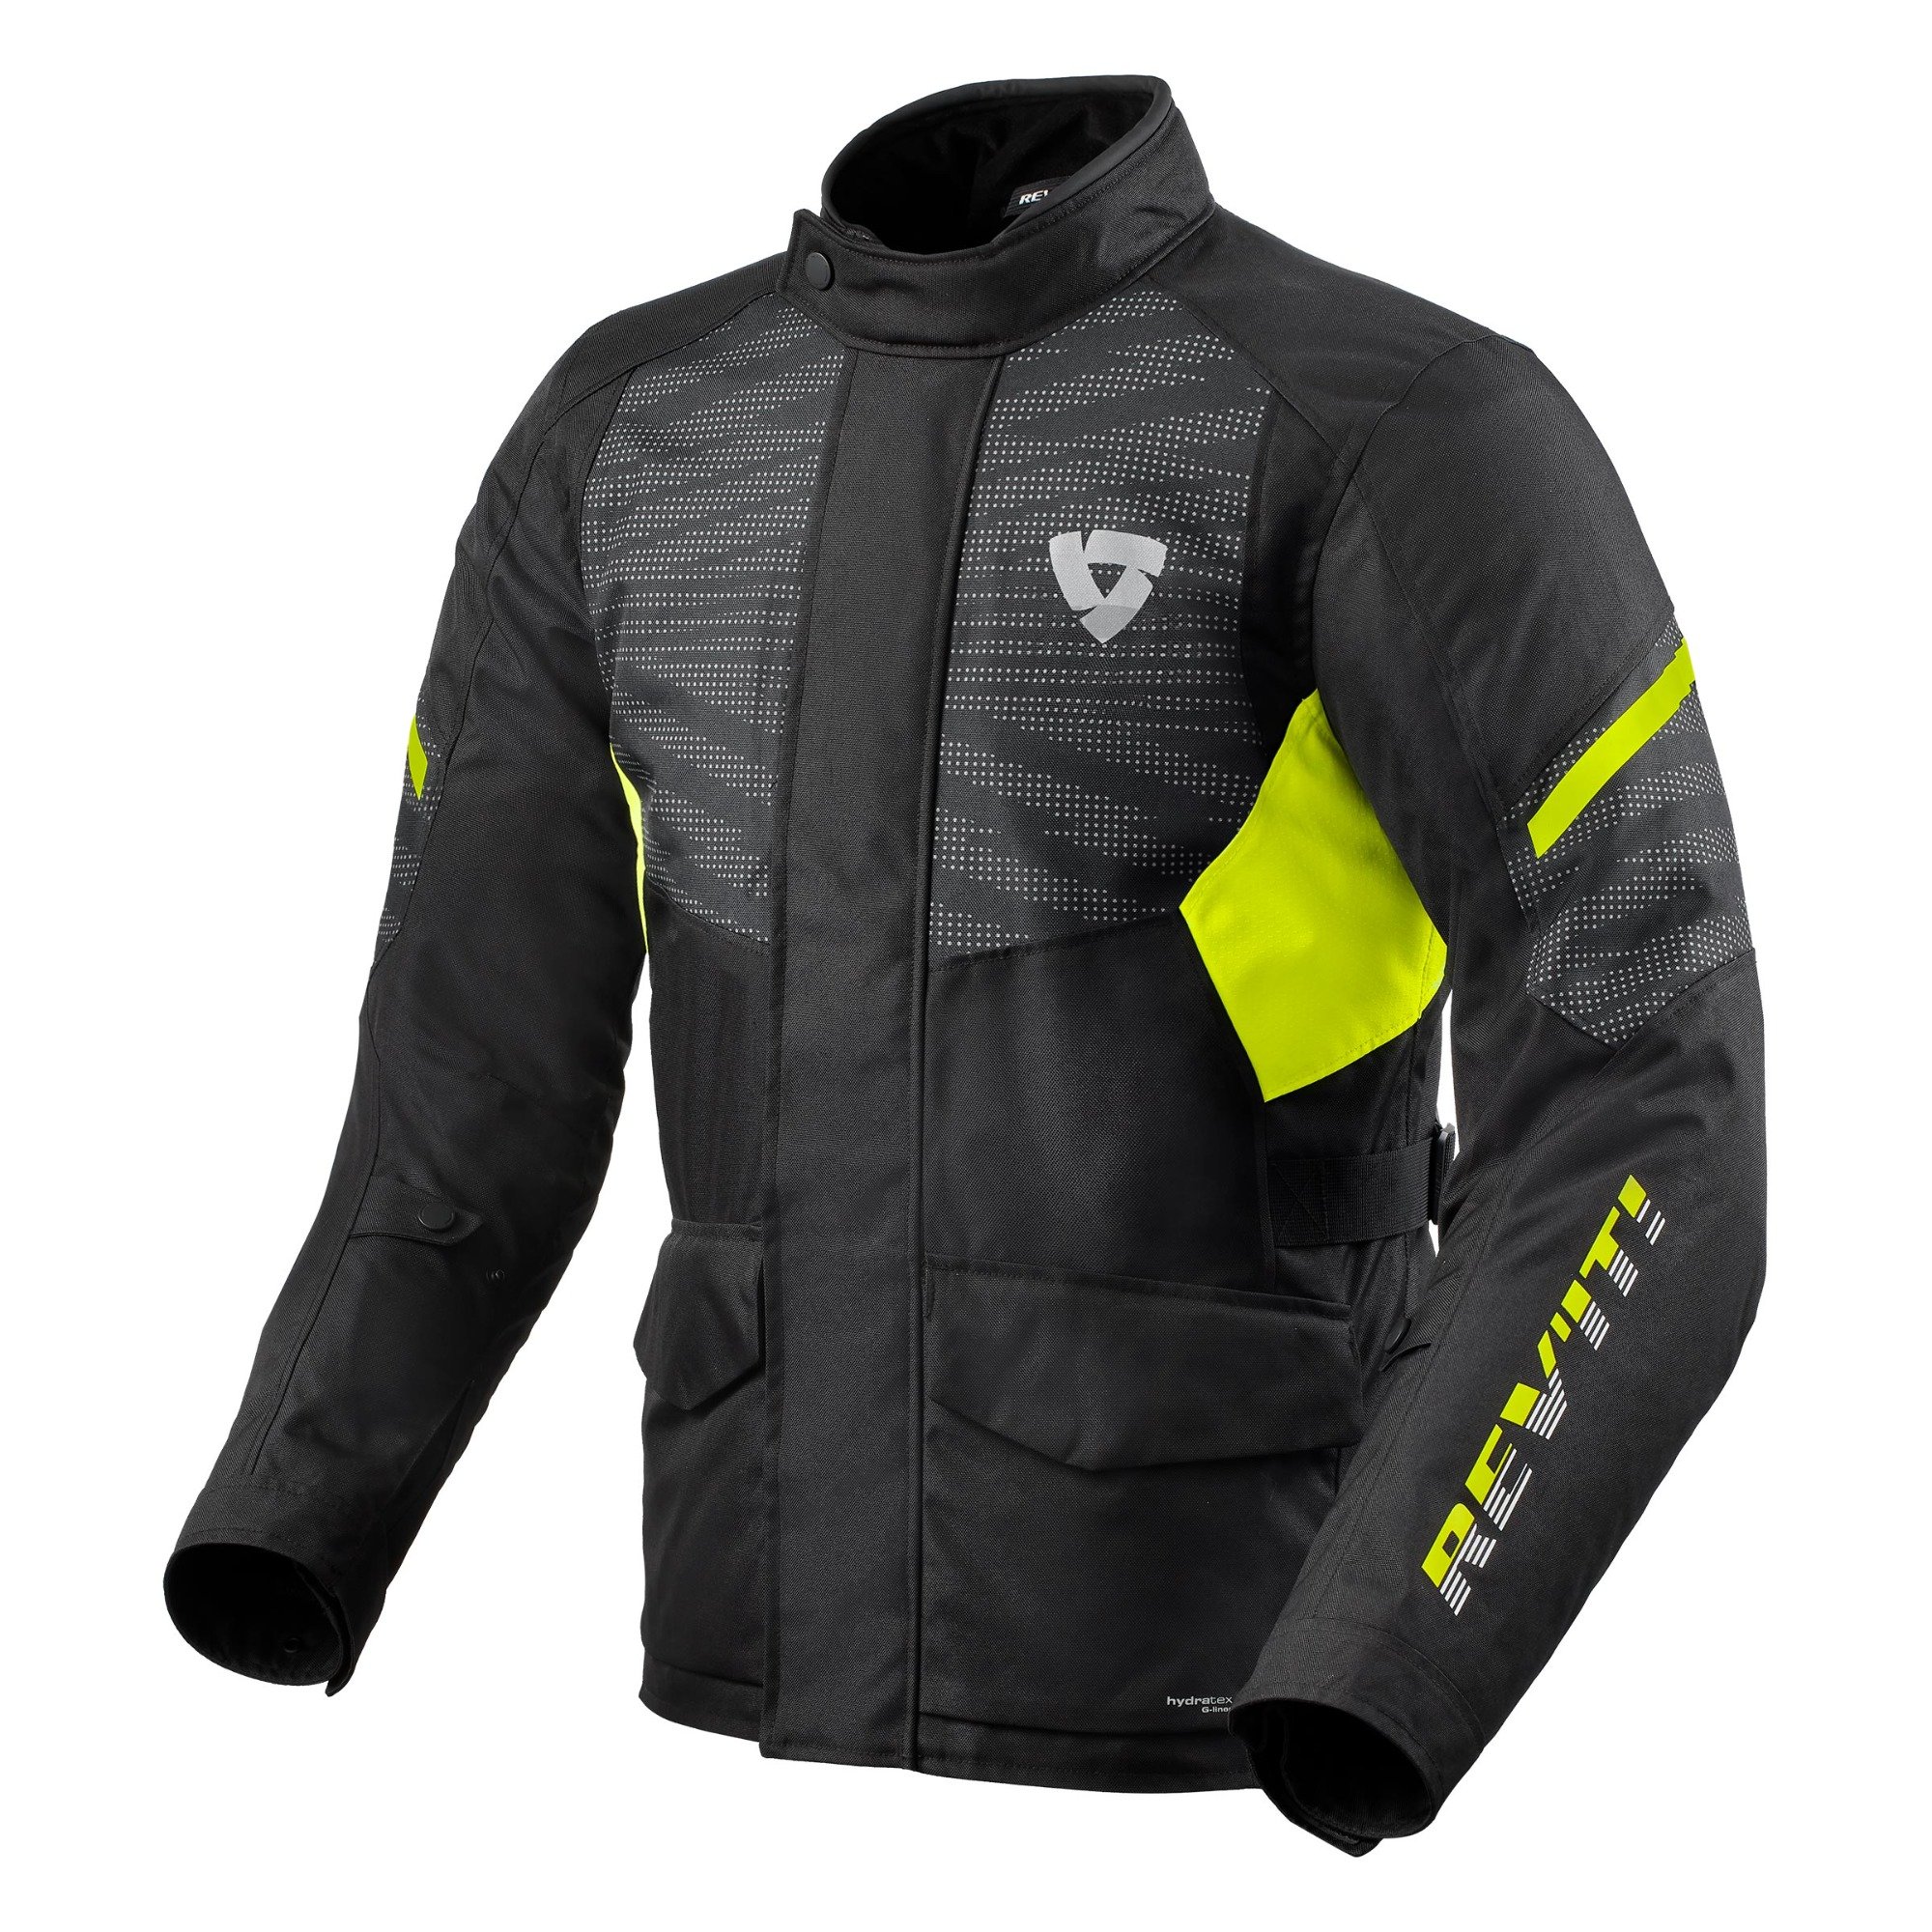 Image of REV'IT! Duke H2O Jacket Black Neon Yellow Size 3XL ID 8700001332163